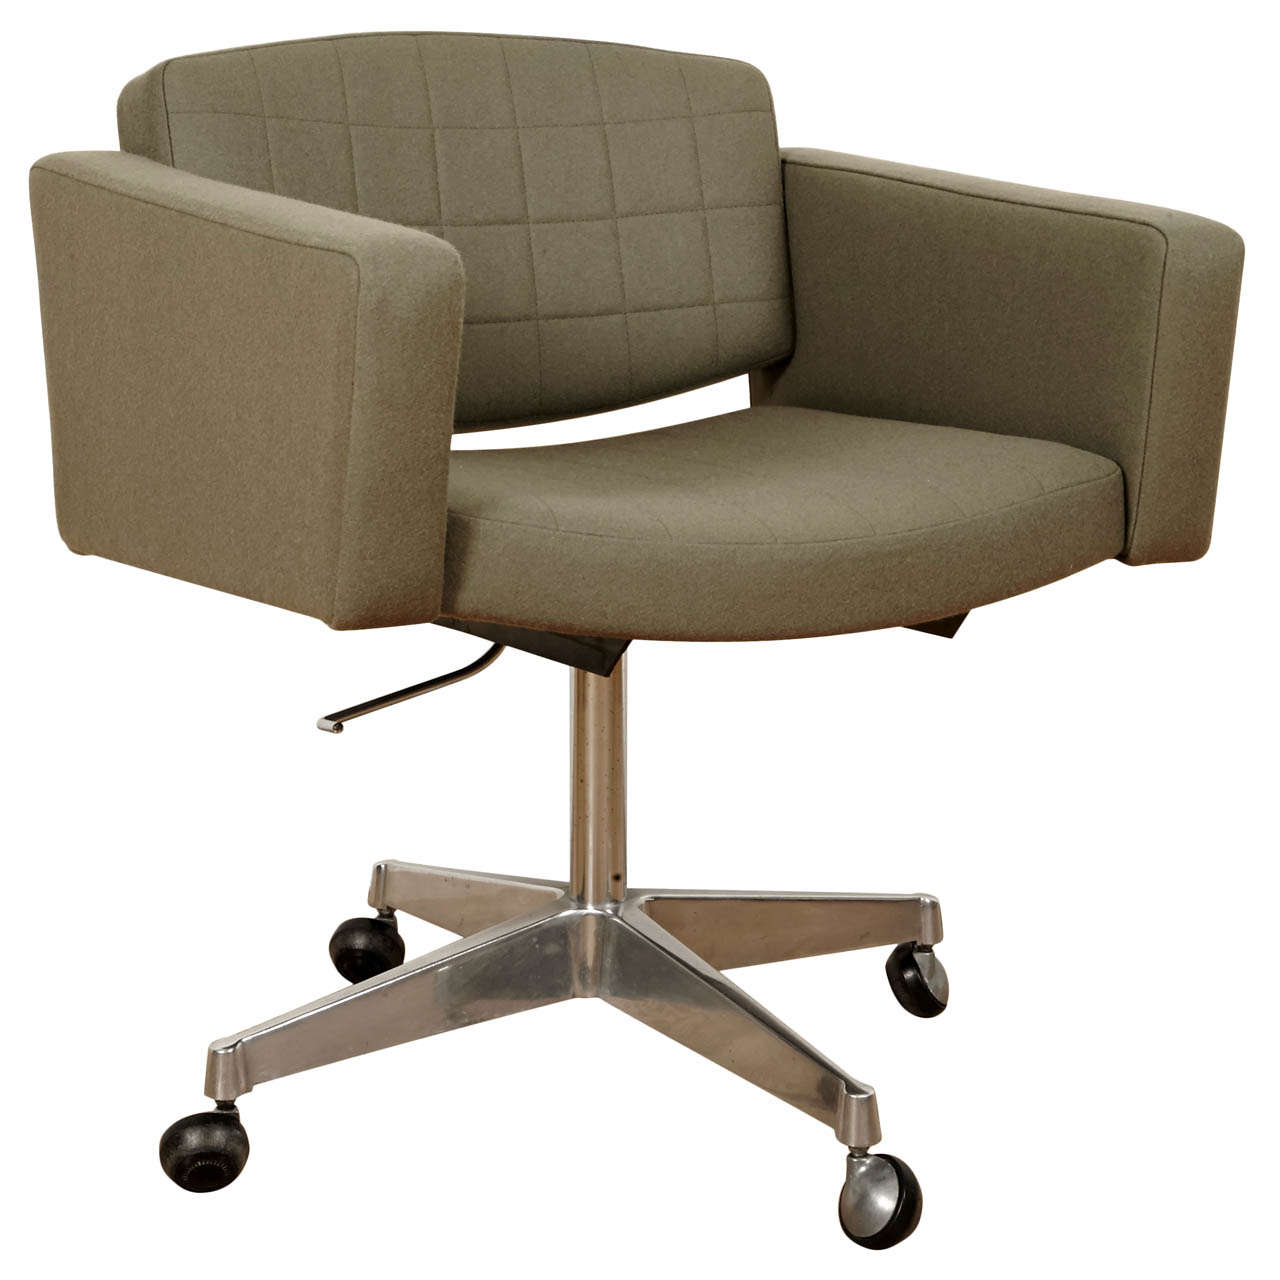 Conseil Chair Designed By Pierre Guariche - Meurop Edition - 1960 For Sale